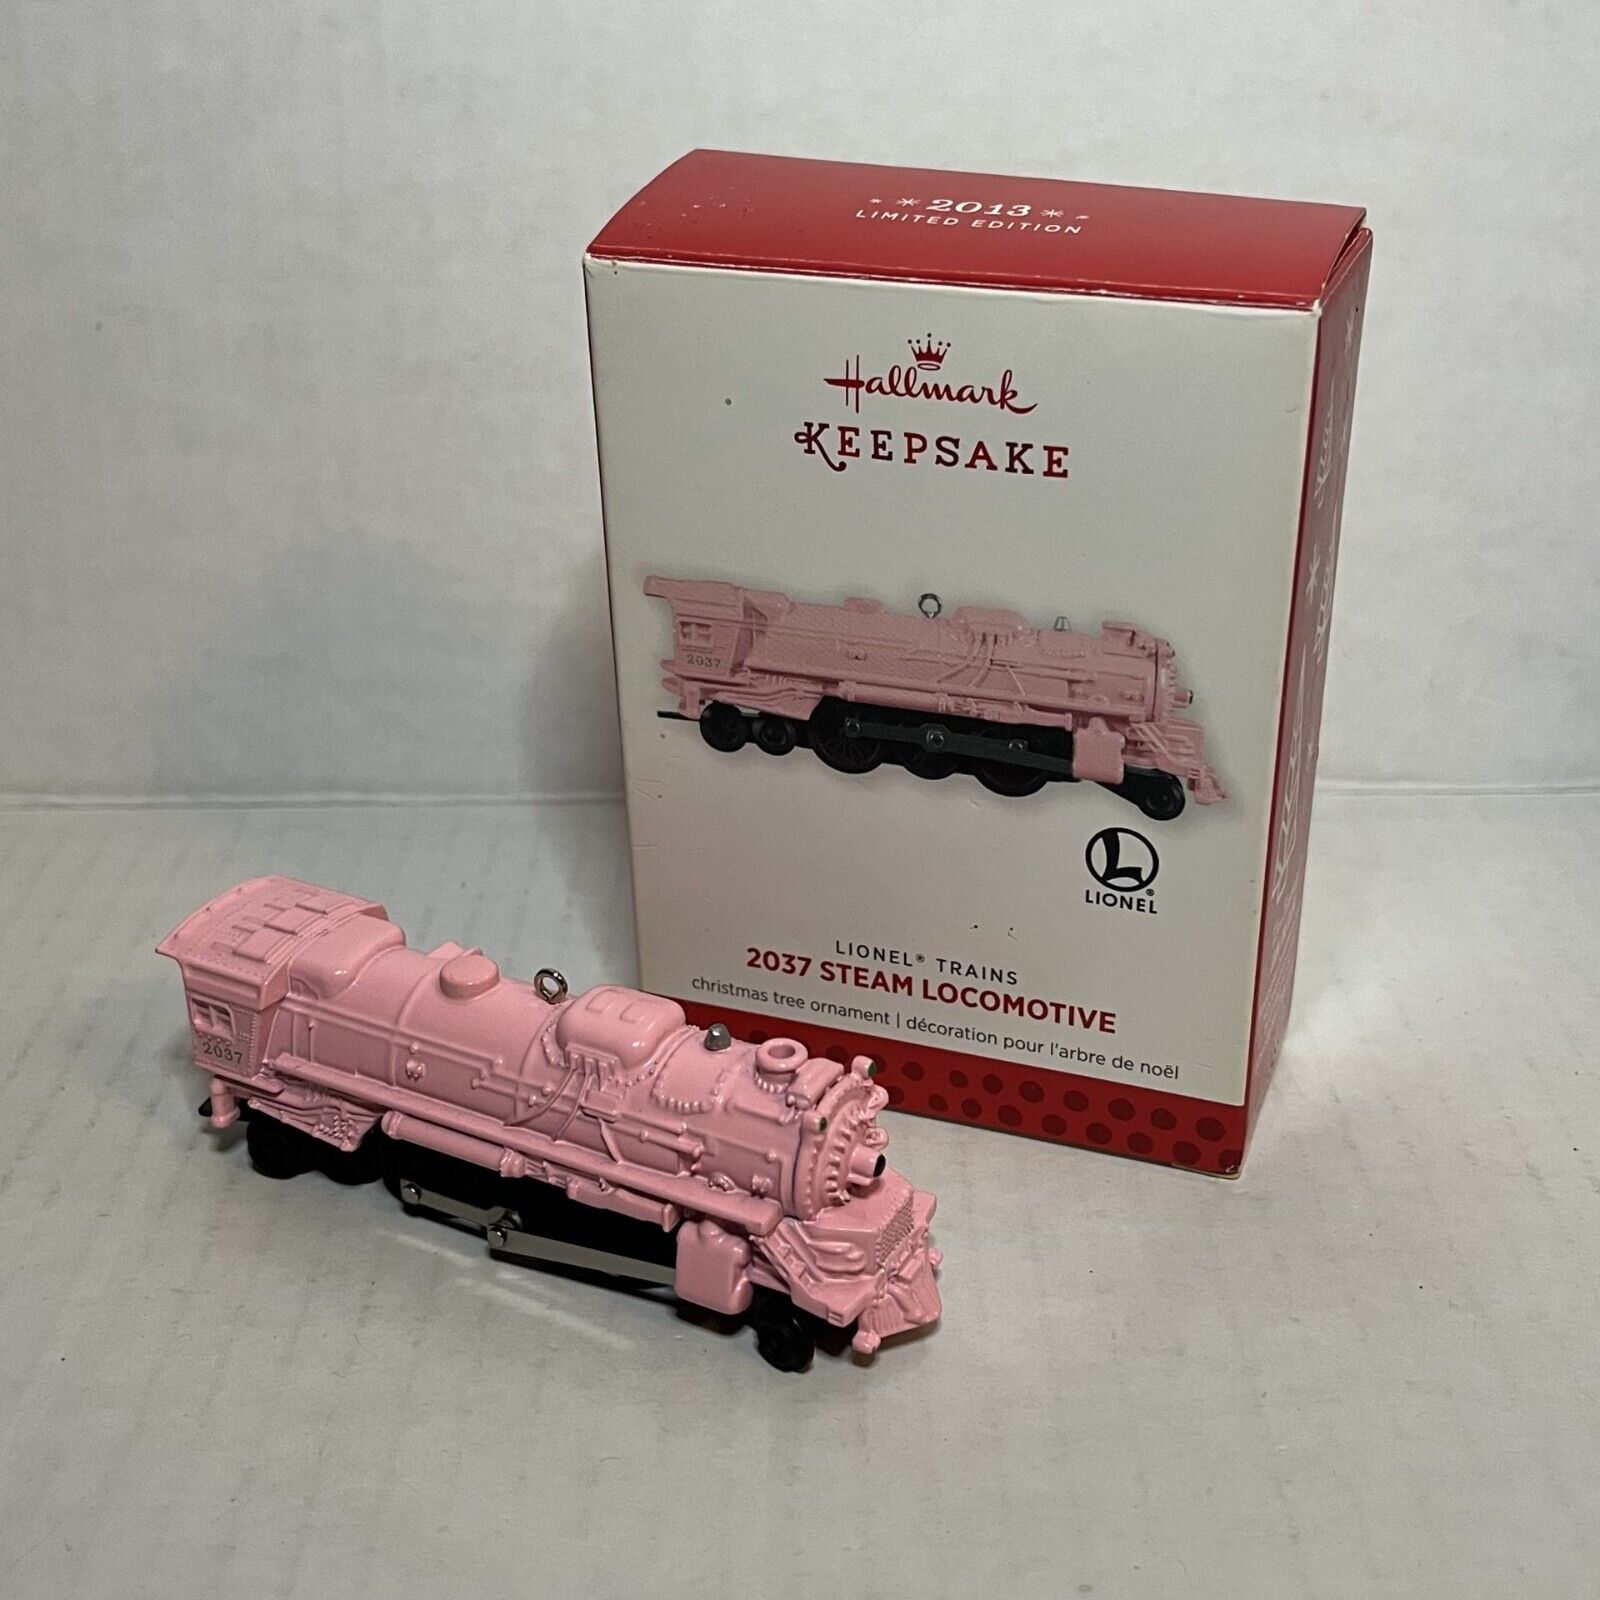 Hallmark Keepsake 2013 LIONEL 2037 Steam Locomotive Limited Edition Ornament NIB